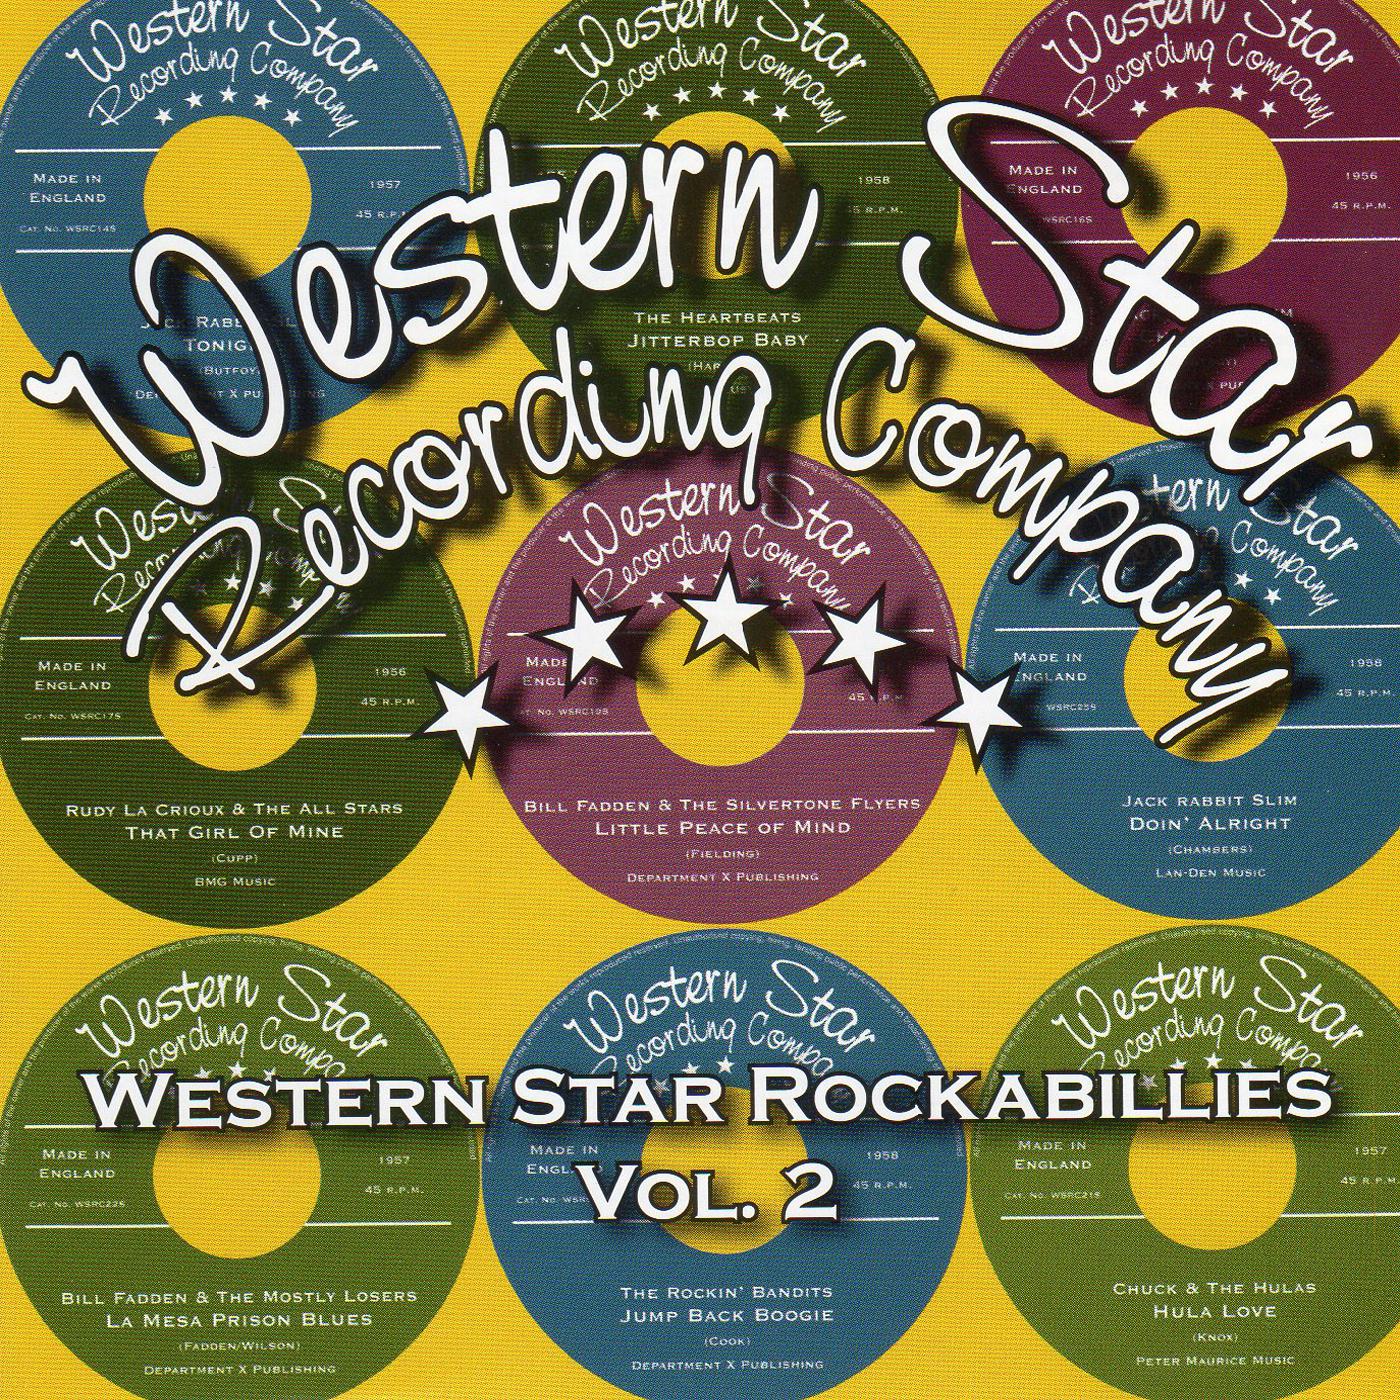 Western Star Rockabillies Vol. 2